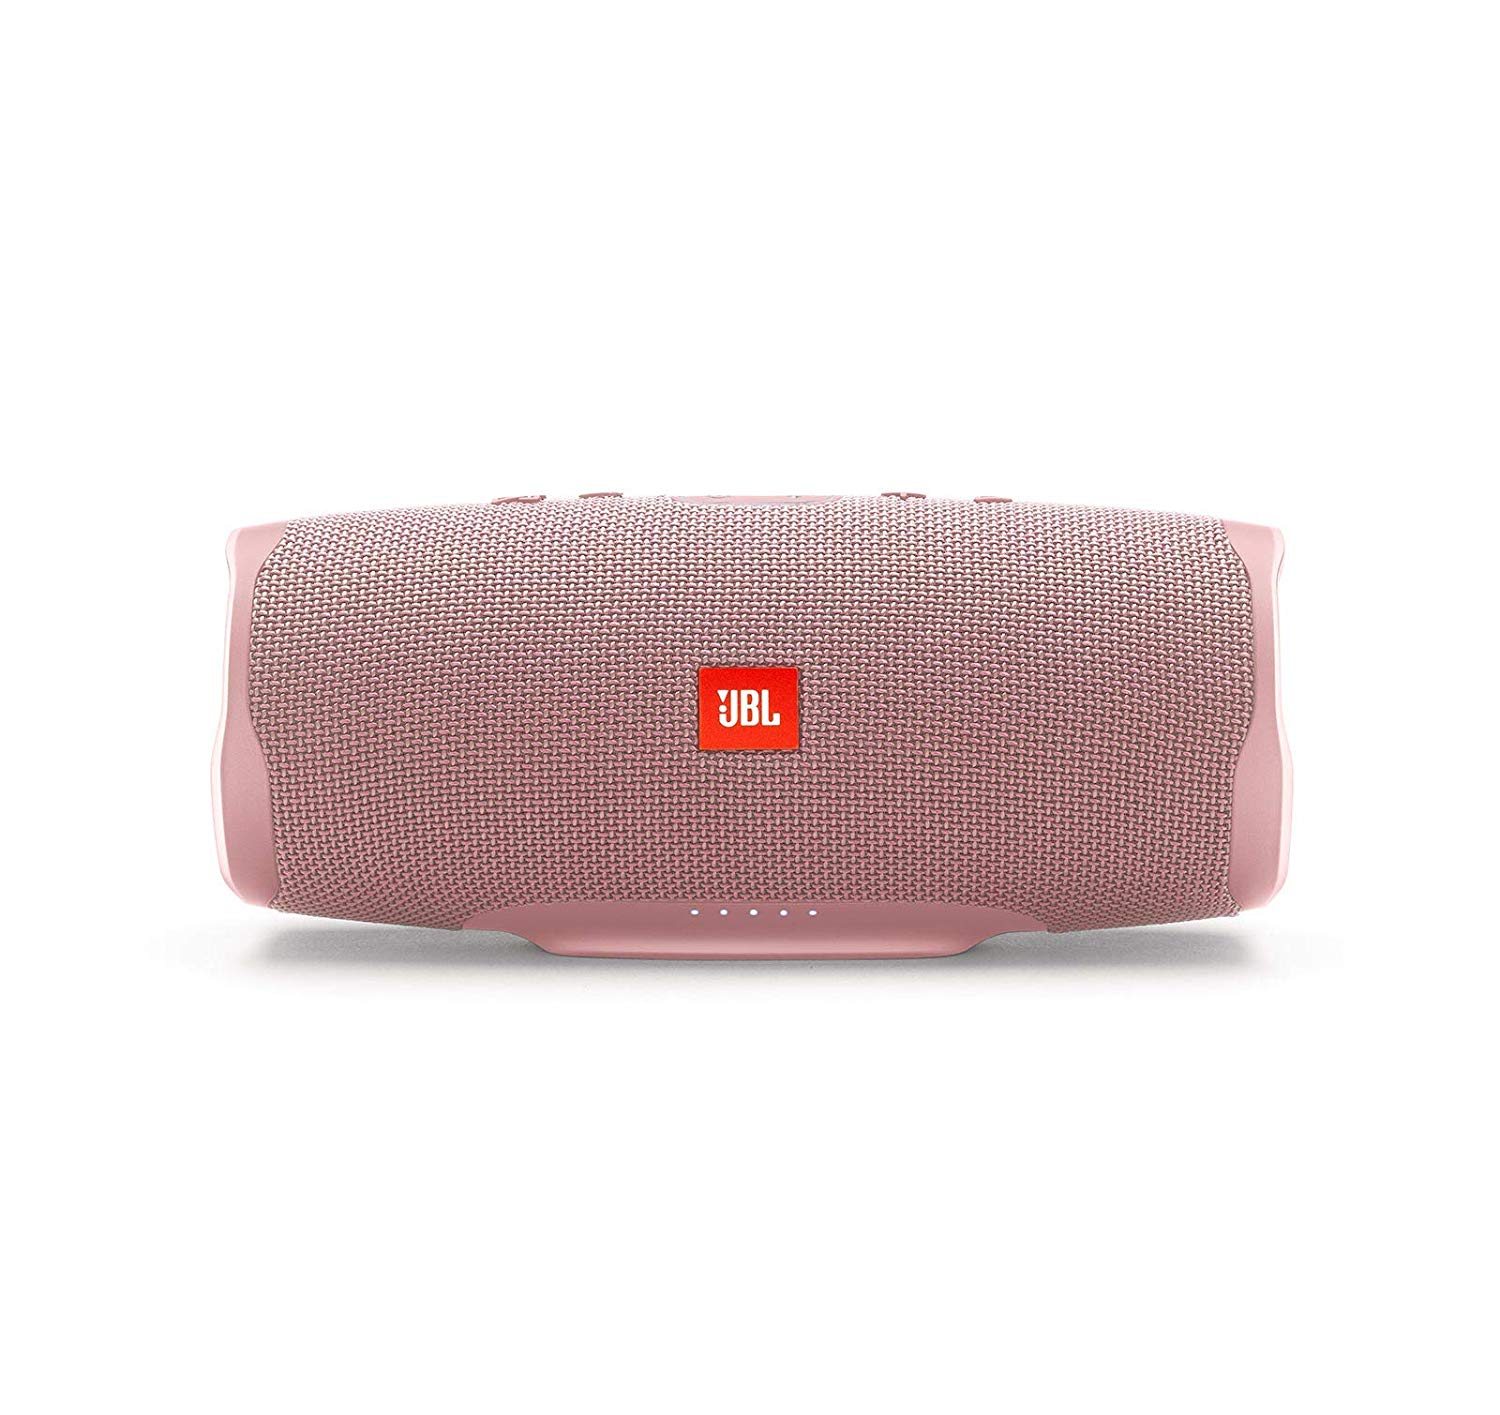 JBL Charge 4 Portable Waterproof Wireless Bluetooth Speaker - Pink - image 1 of 2